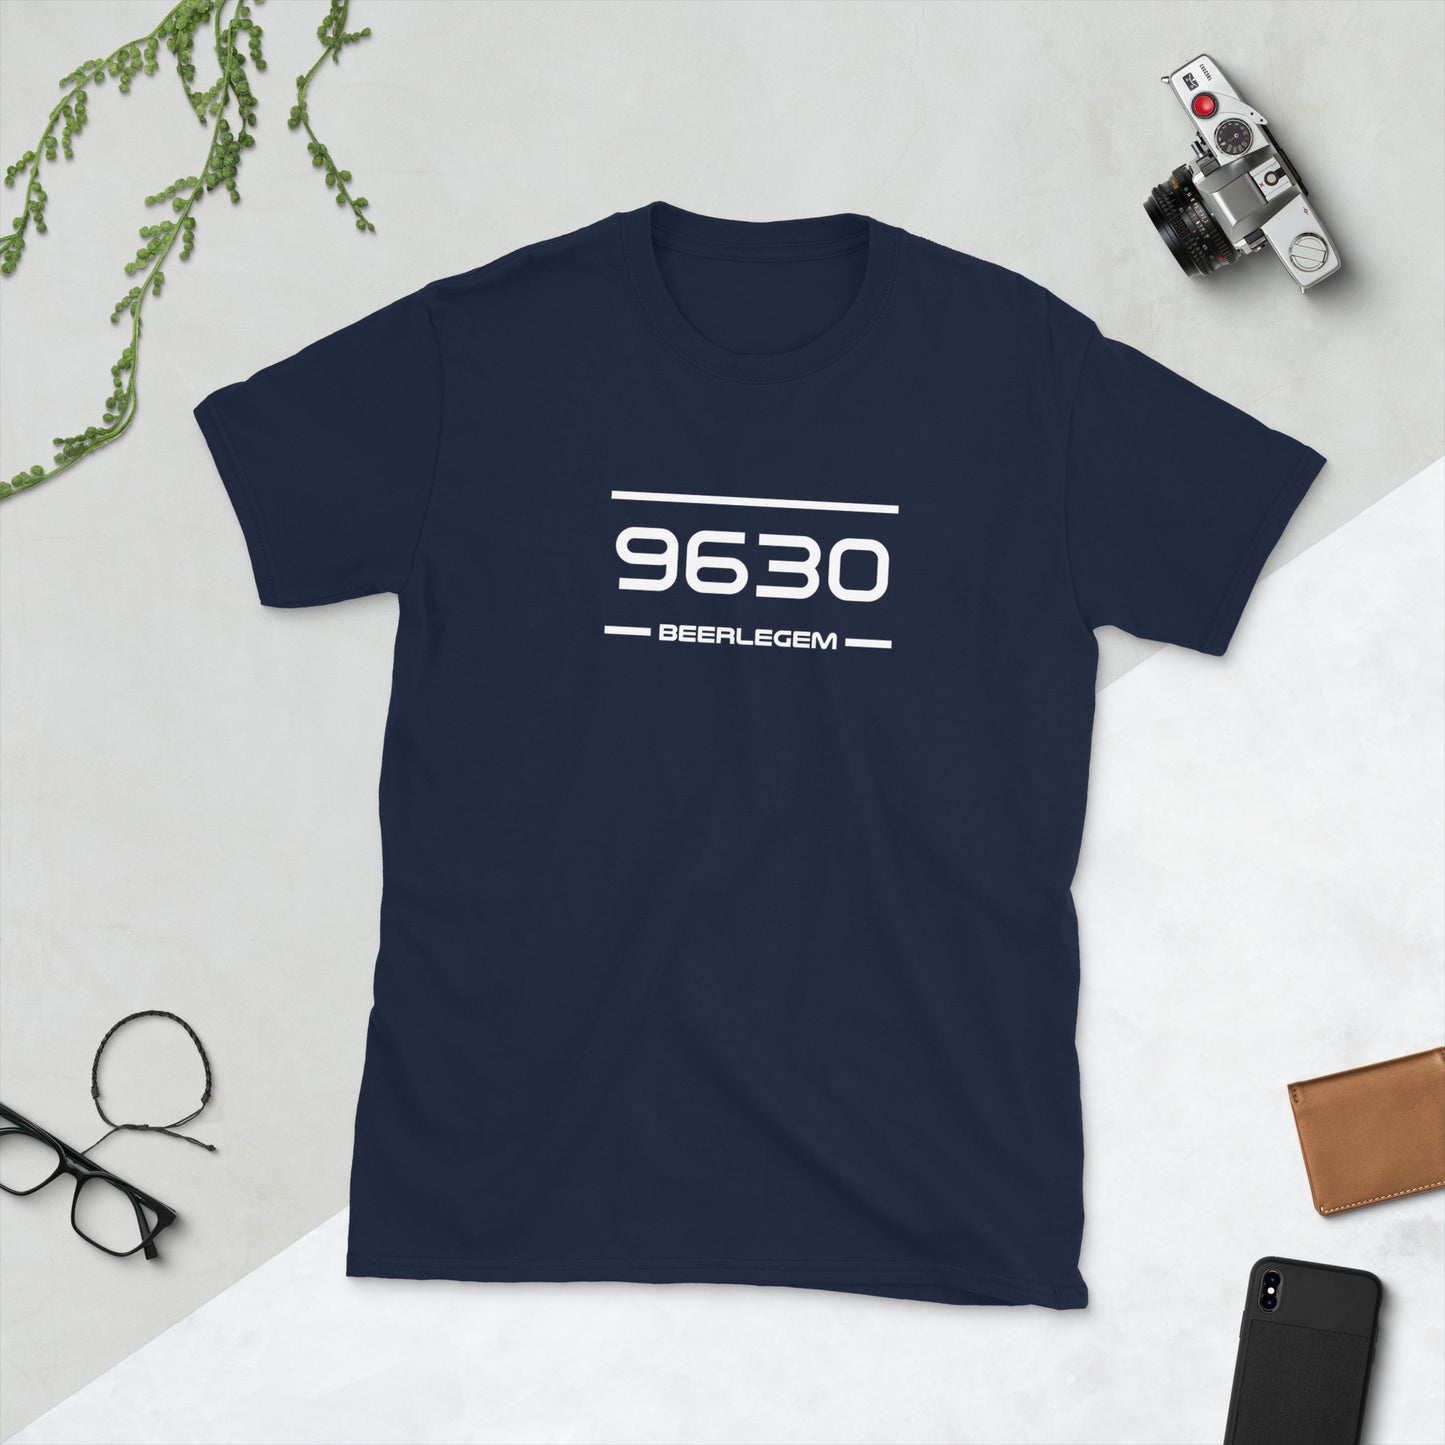 T-Shirt - 9630 - Beerlegem